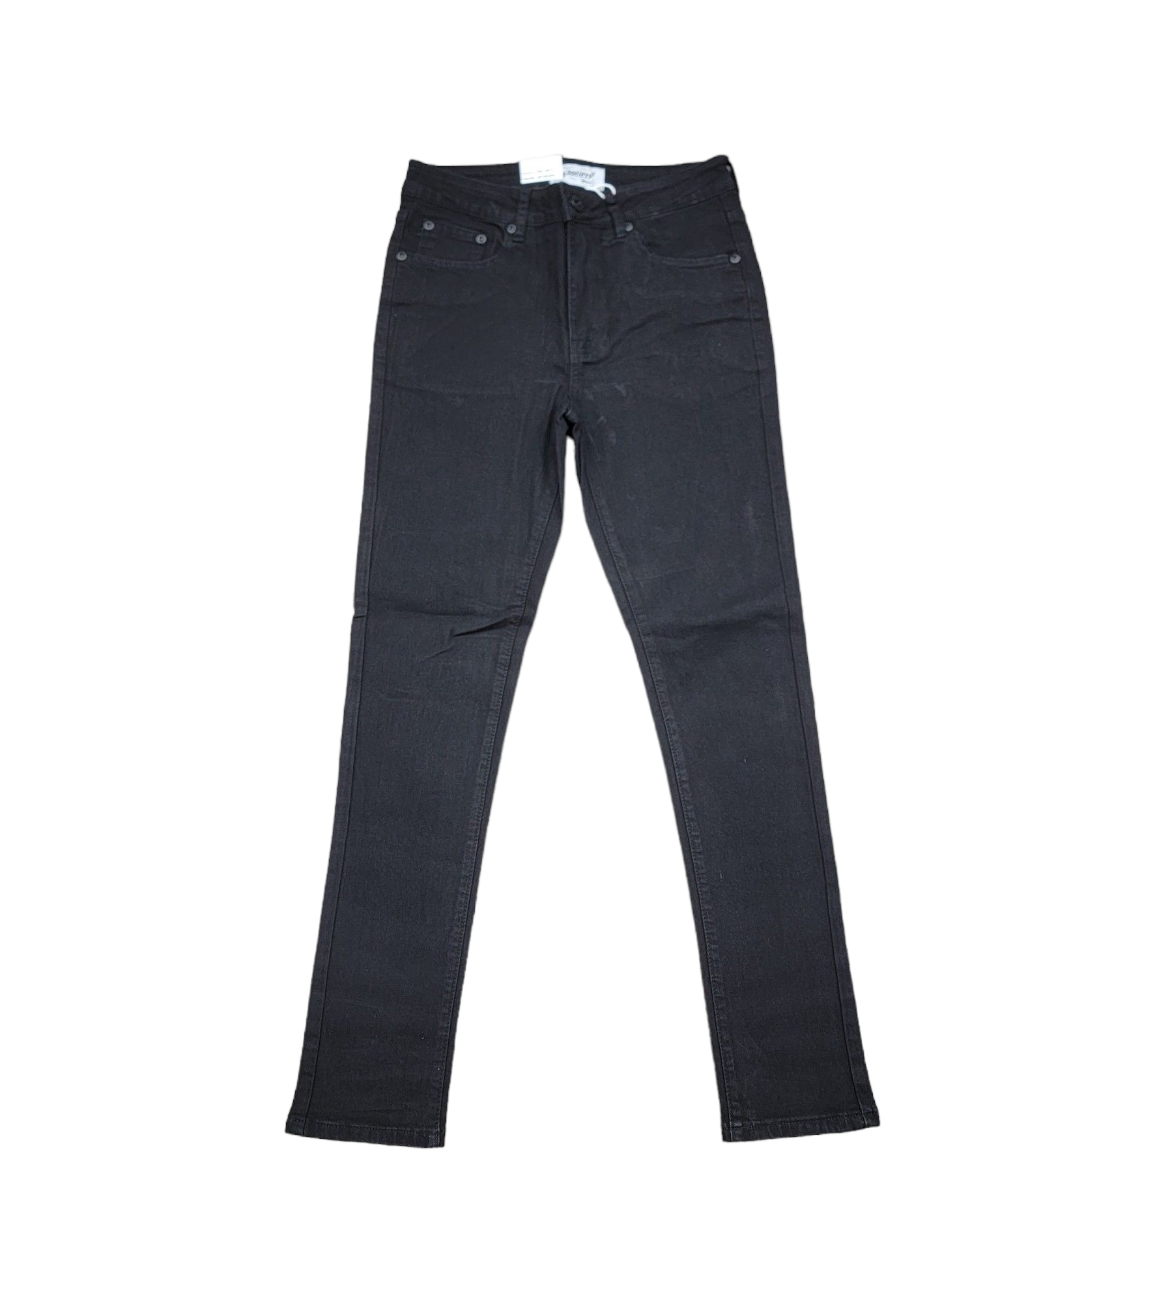 M Society Men's Super Stretchy Skinny Fit Jeans Jet Black 13075